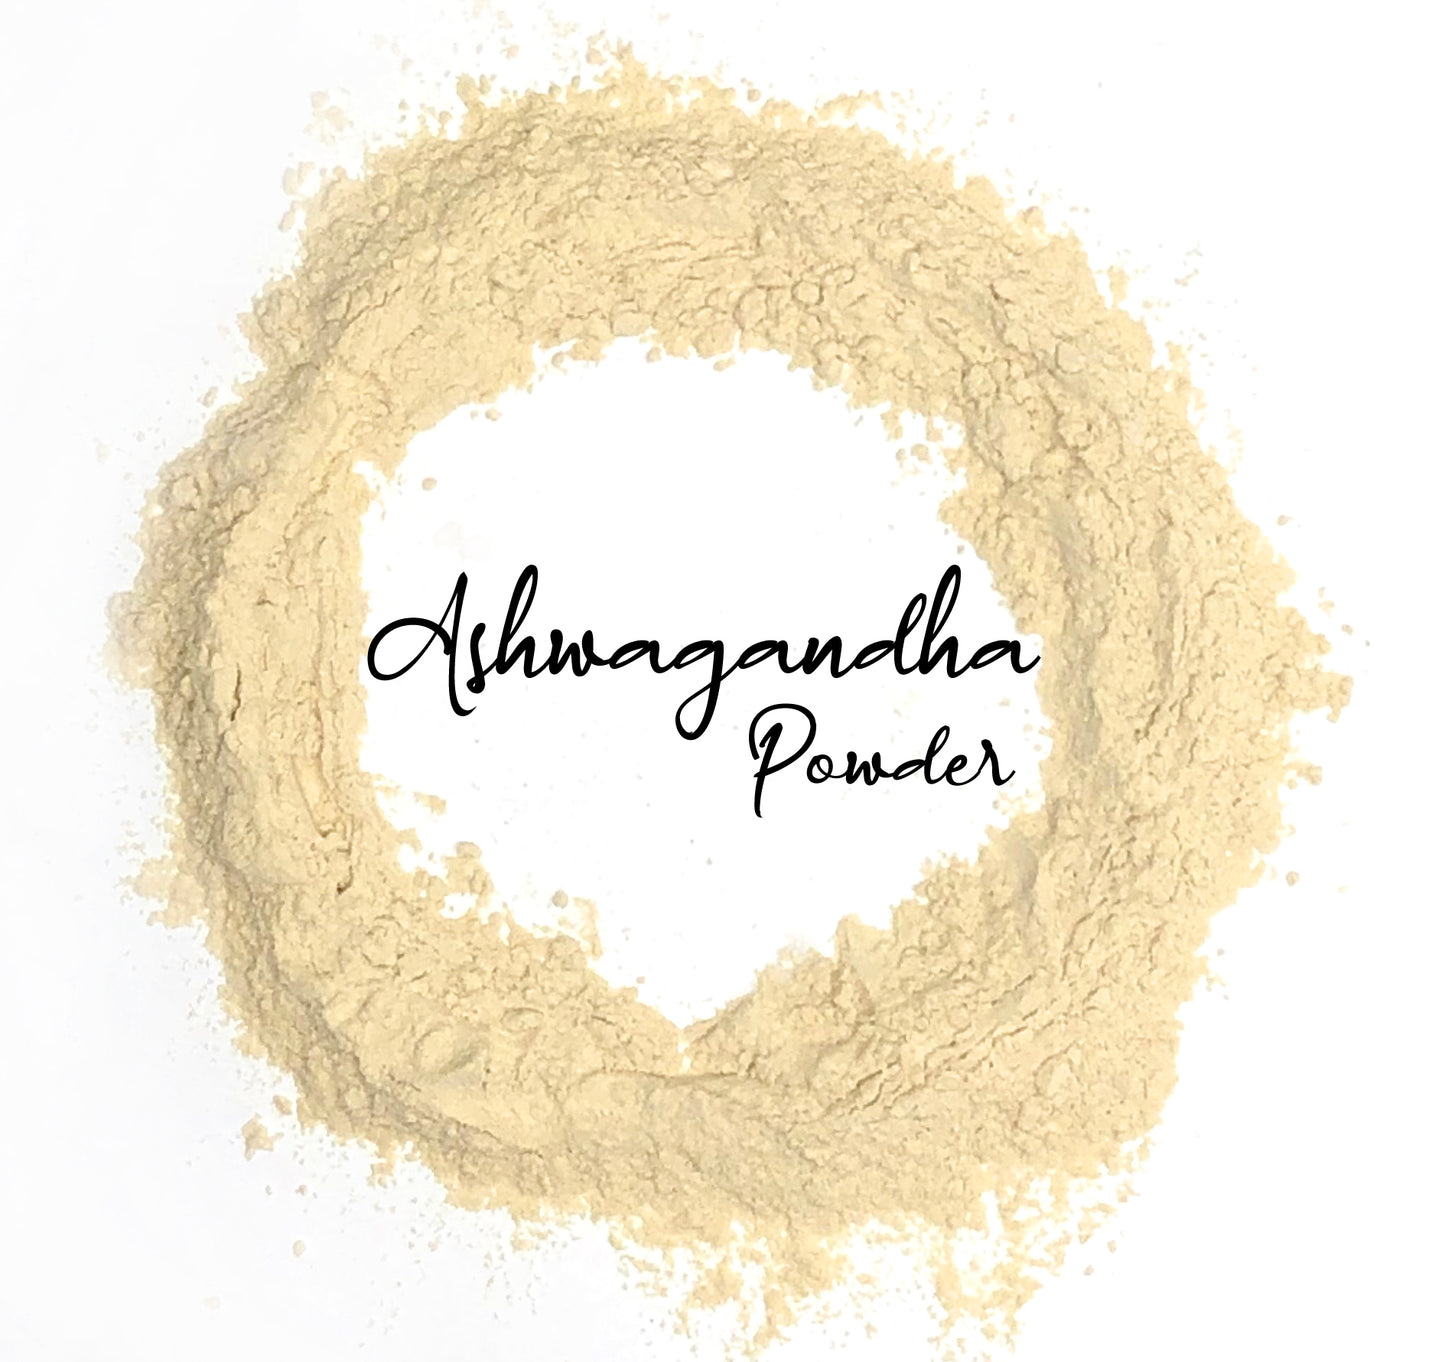 Wholesale Spices & Herbs - Ashwagandha Powder, Organic 8oz (227g) Bag